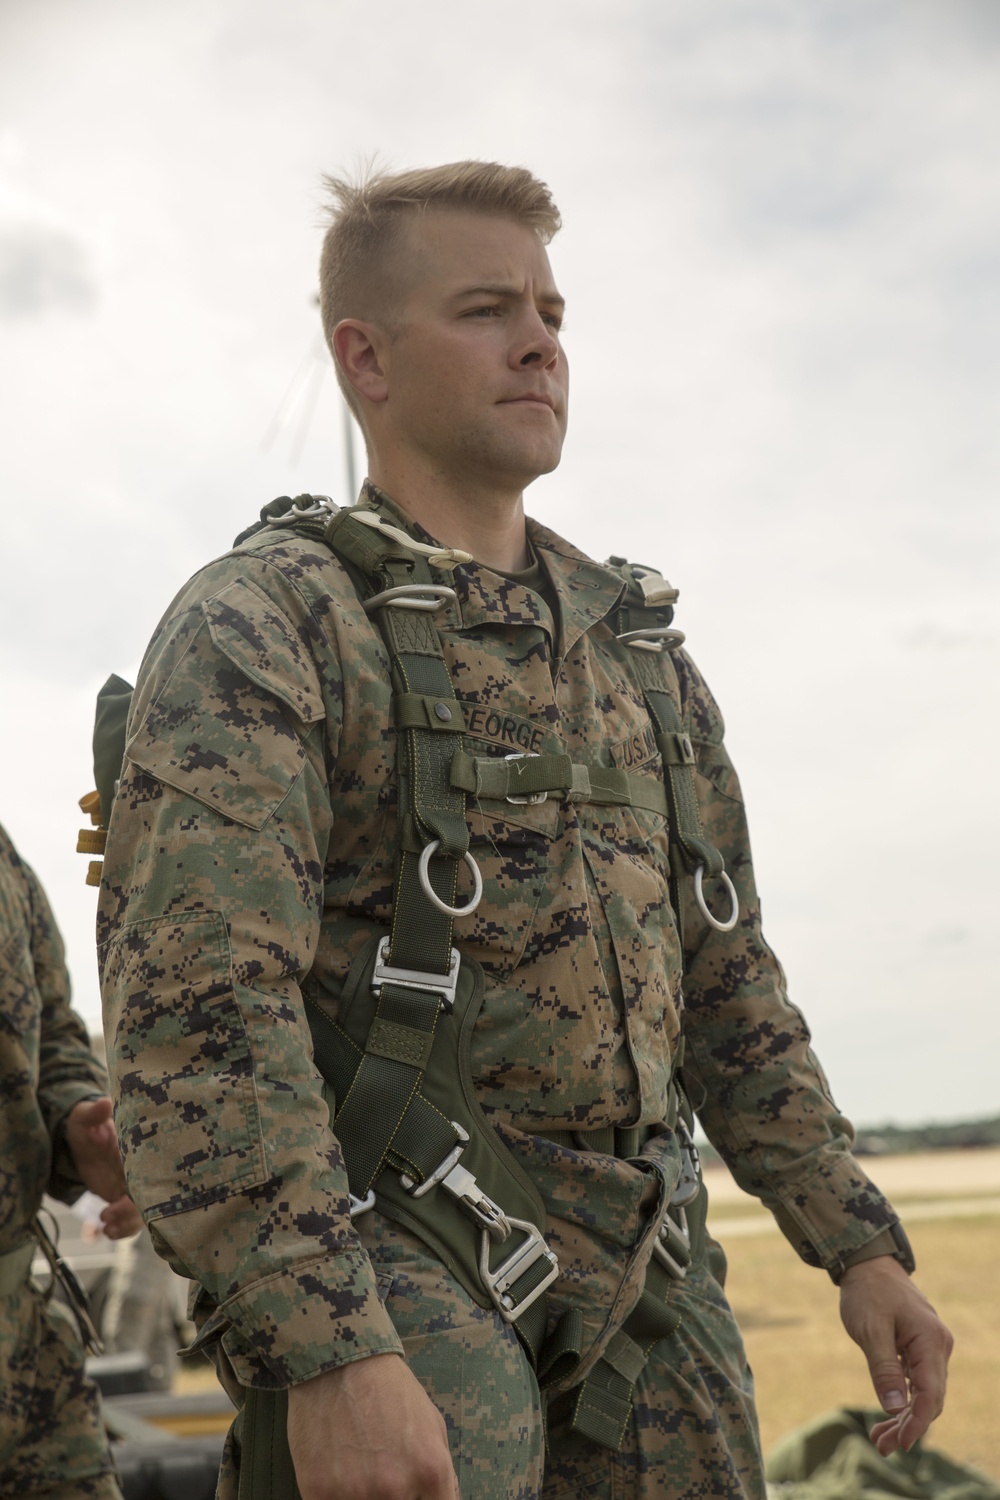 Reserve Reconnaissance Marines showcase their skills